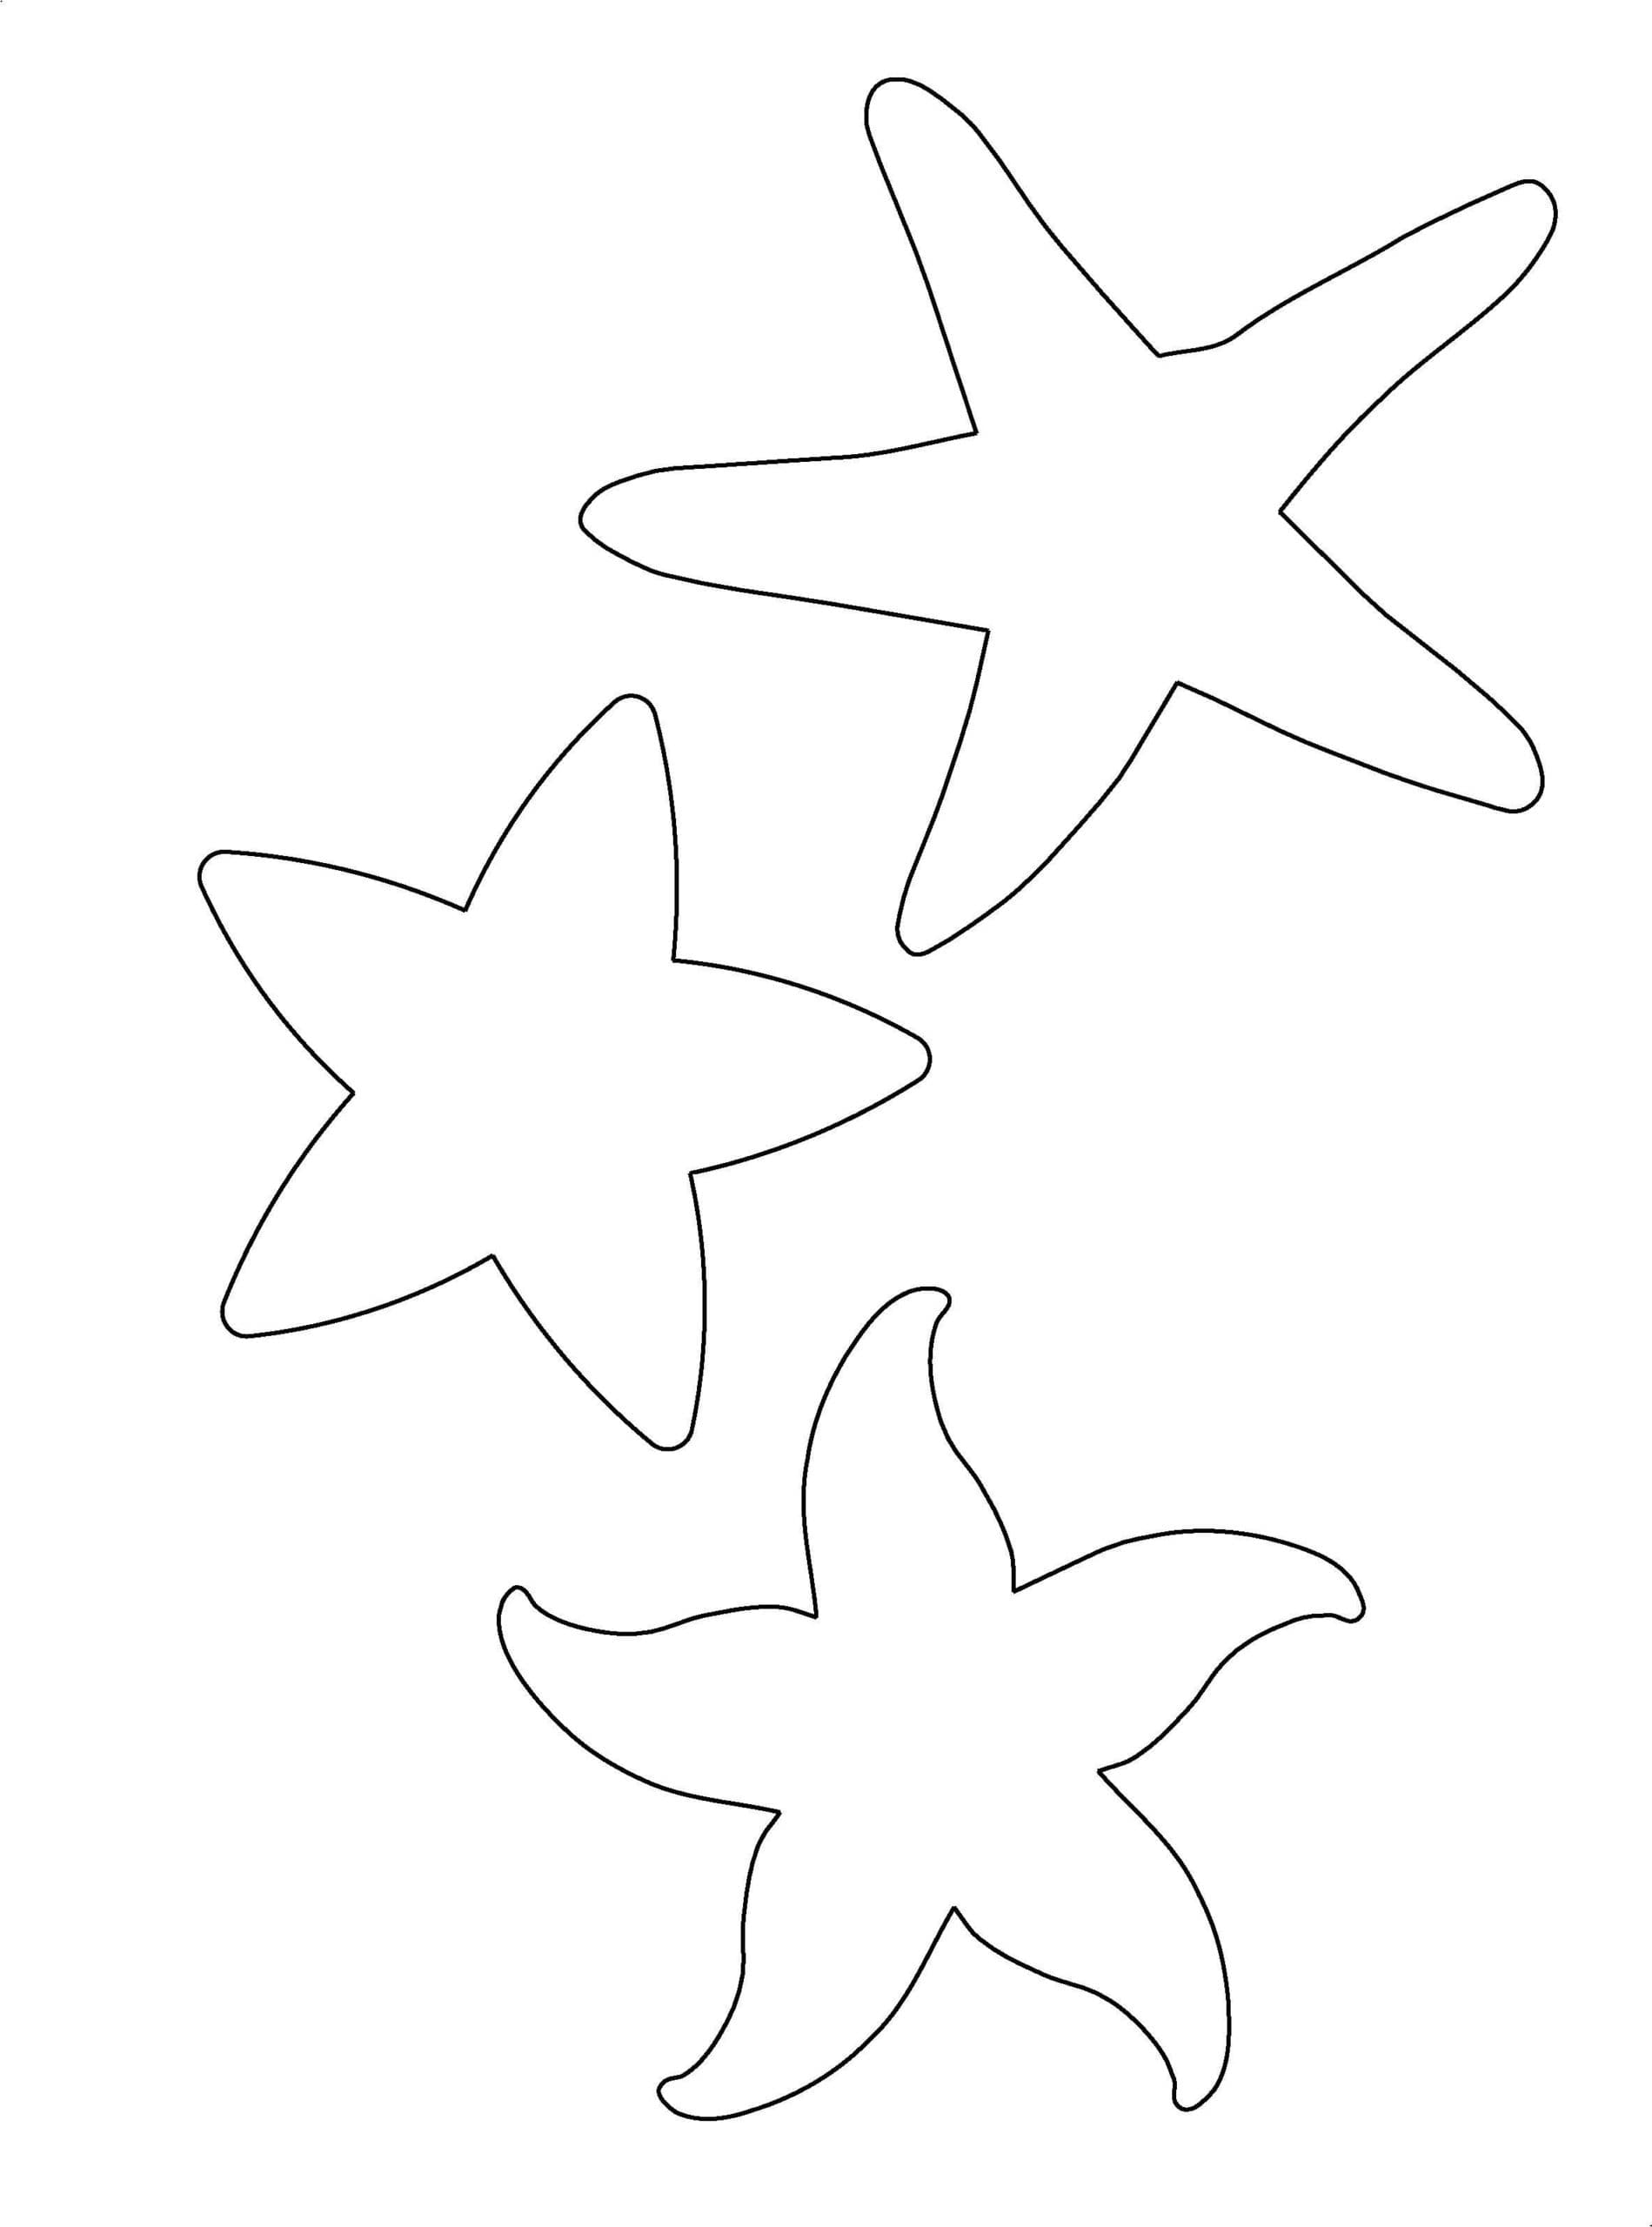 Трафарет и шаблон Звезды. Раскраска 12